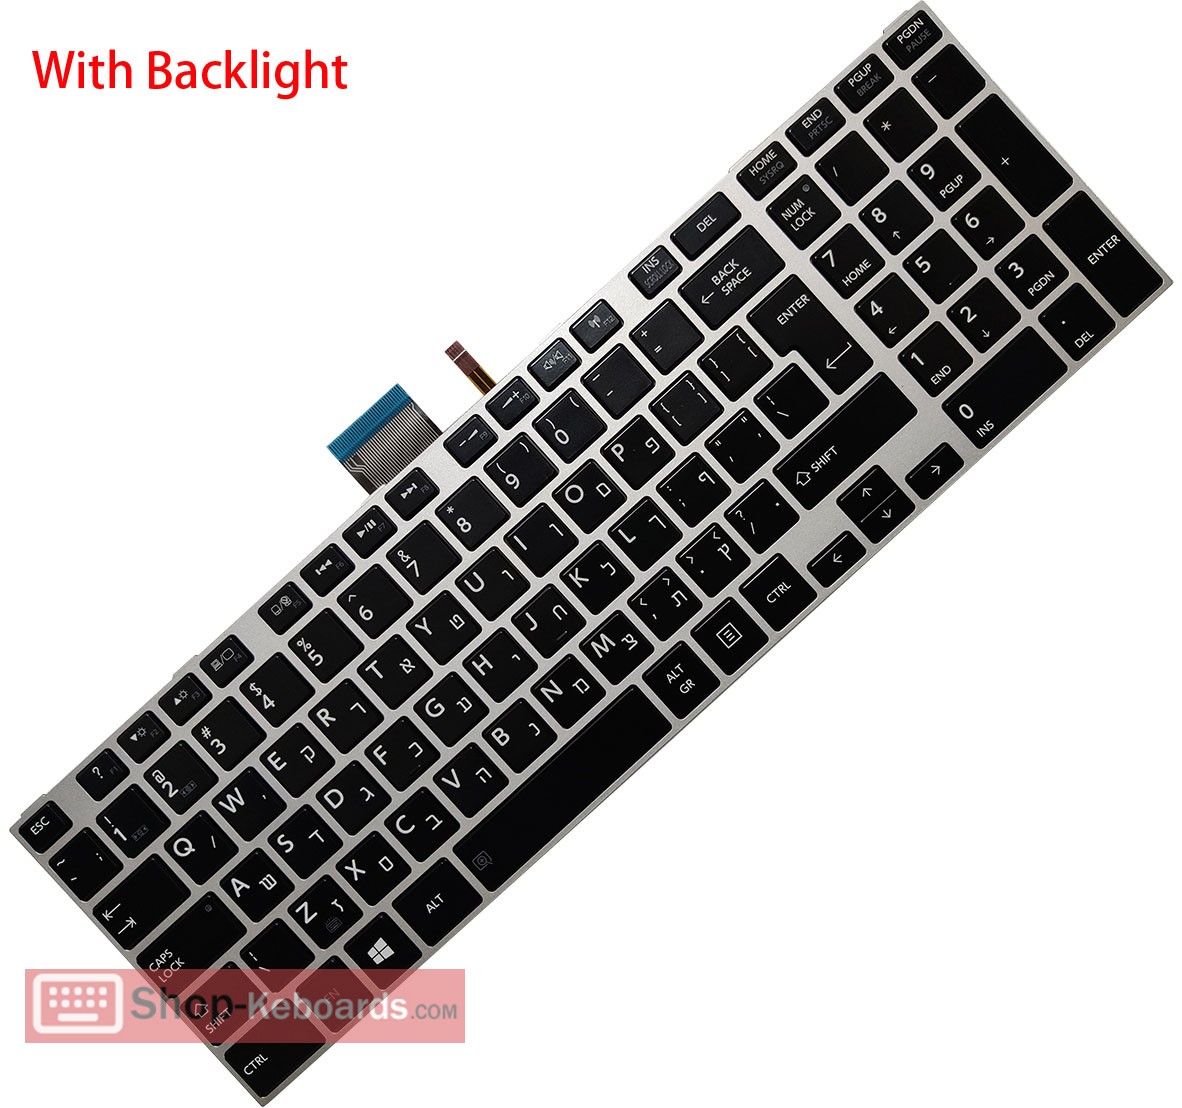 Toshiba Satellite S55t Keyboard replacement